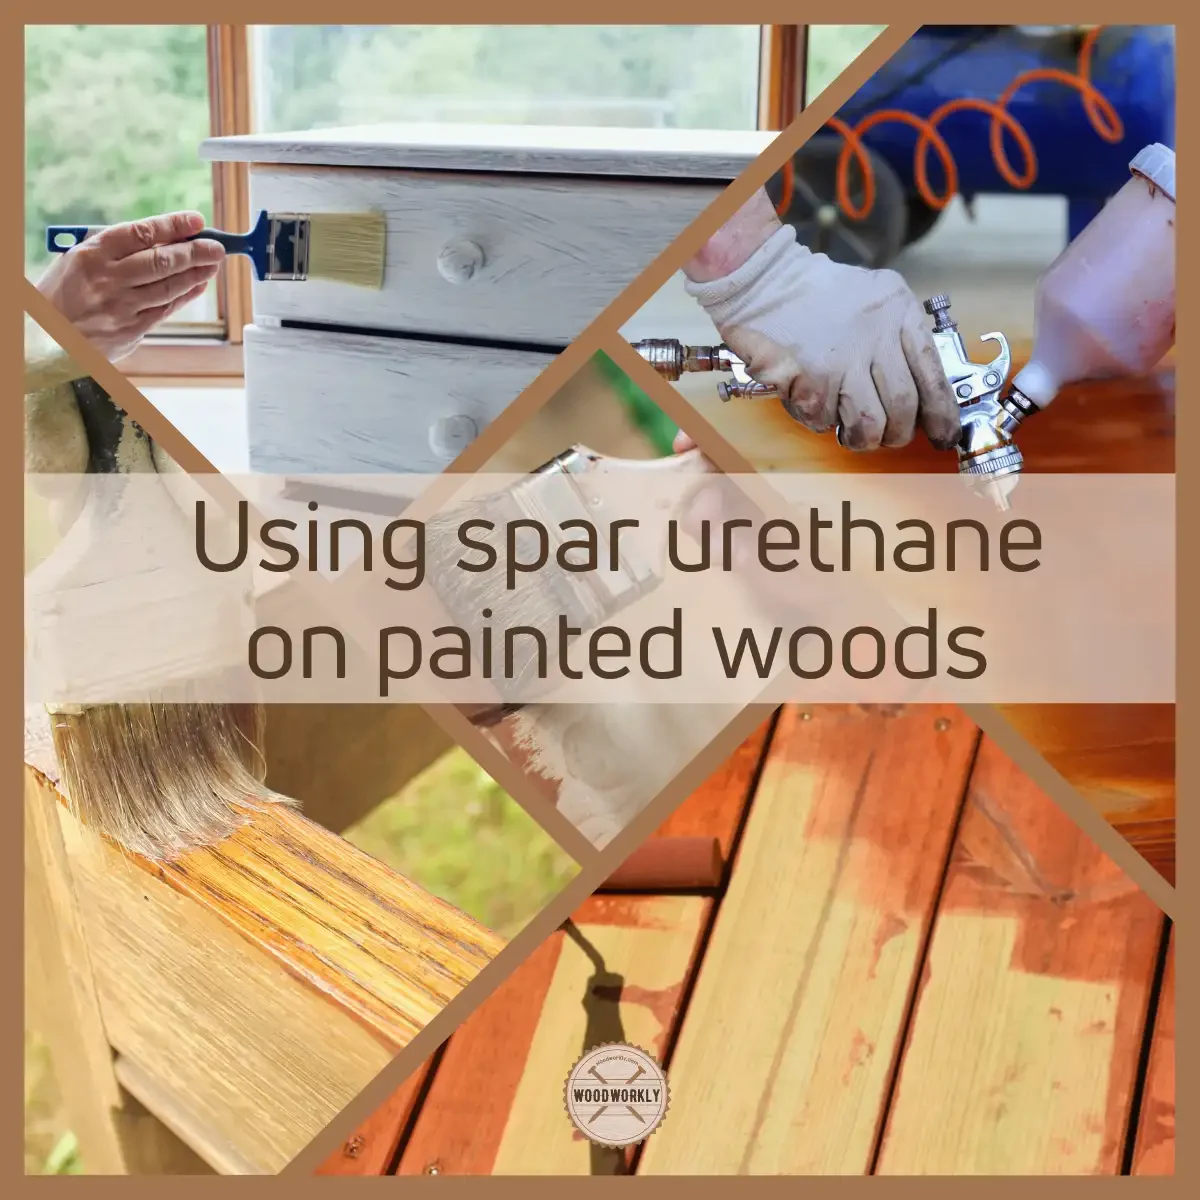 Using spar urethane on painted woods